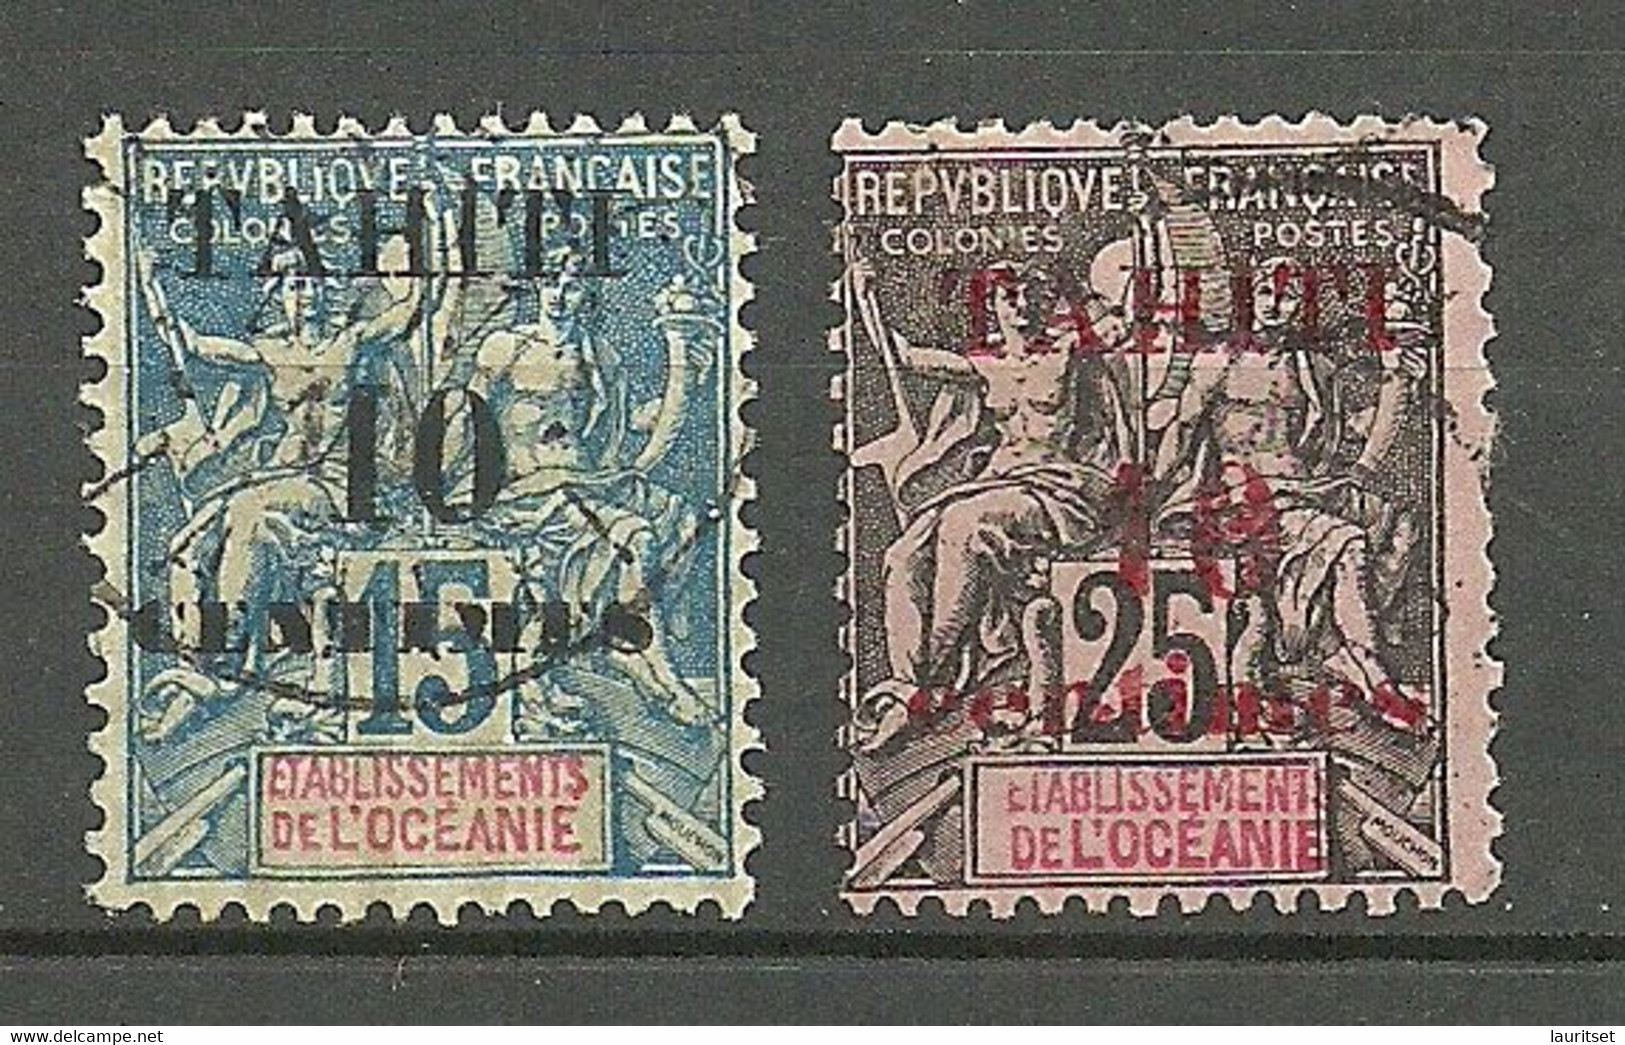 TAHITI OPT Etablissements De L`Oceanie FRANKREICH France 1903 Michel 21 - 22 O - Used Stamps